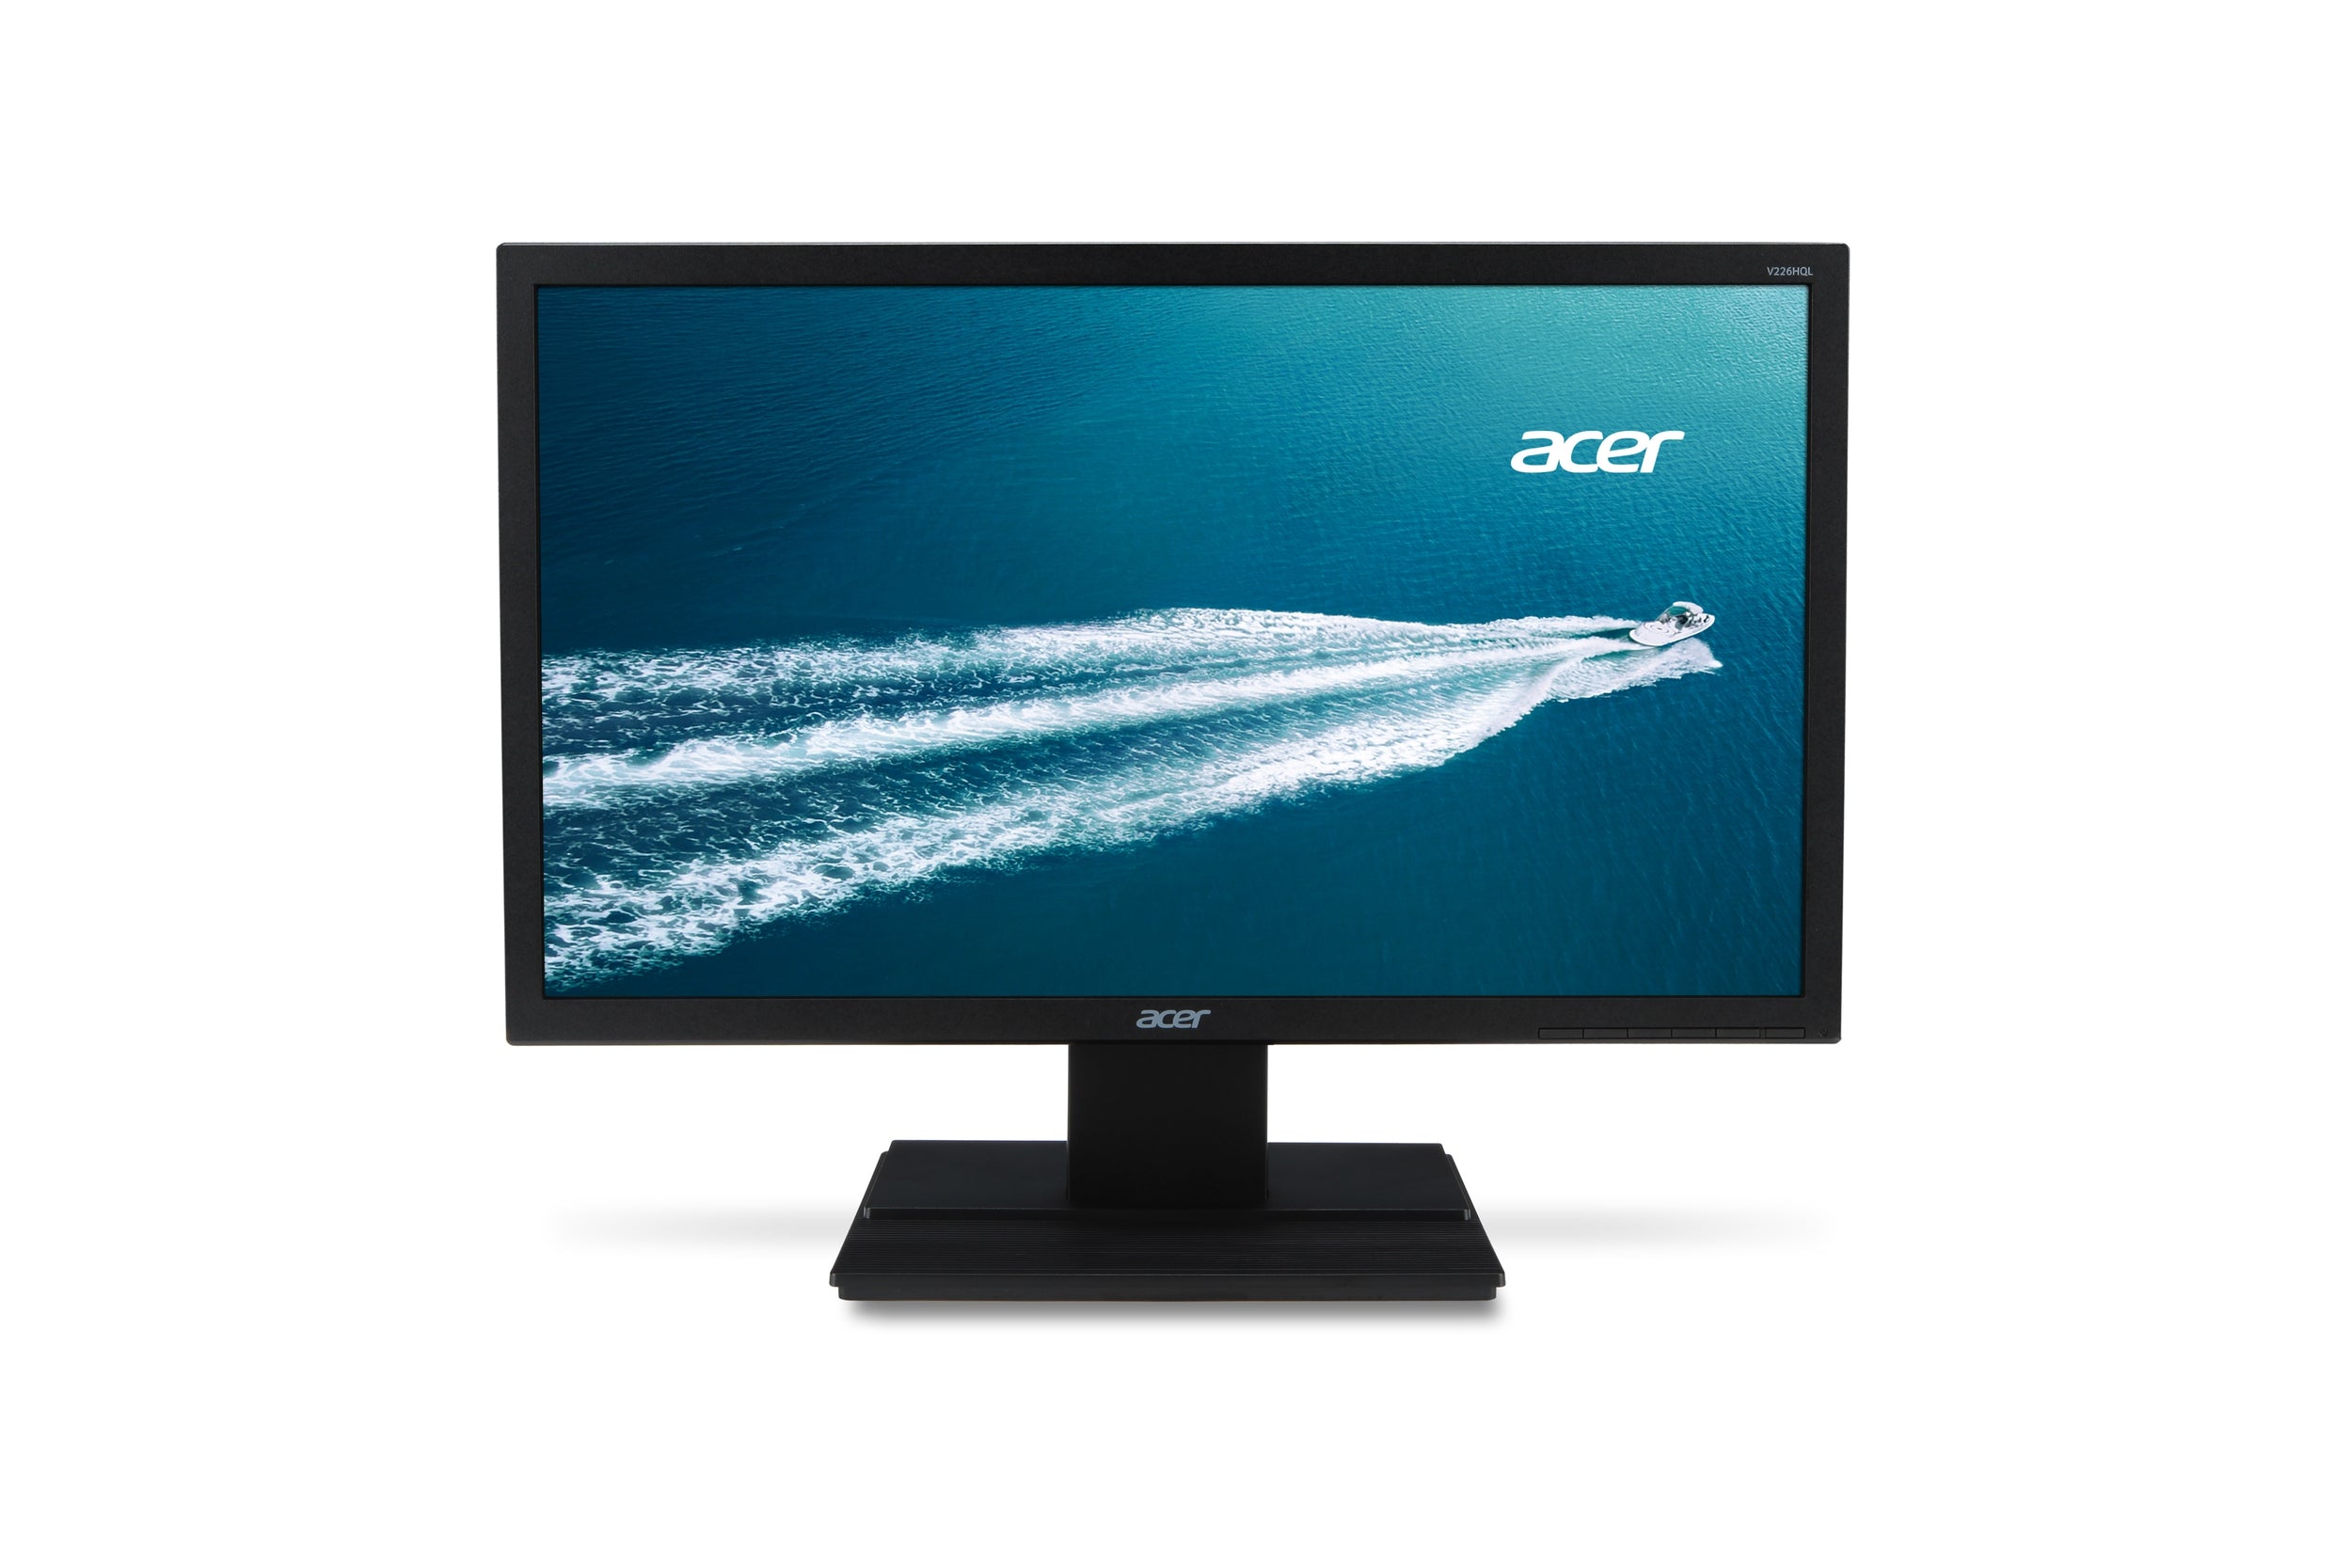 Monitor Acer V226Hql 21.5 Fhd 1920 X 1080 5Ms Hdmi 1; Vga 3 Años De Garantia En Cs/ Bundle.